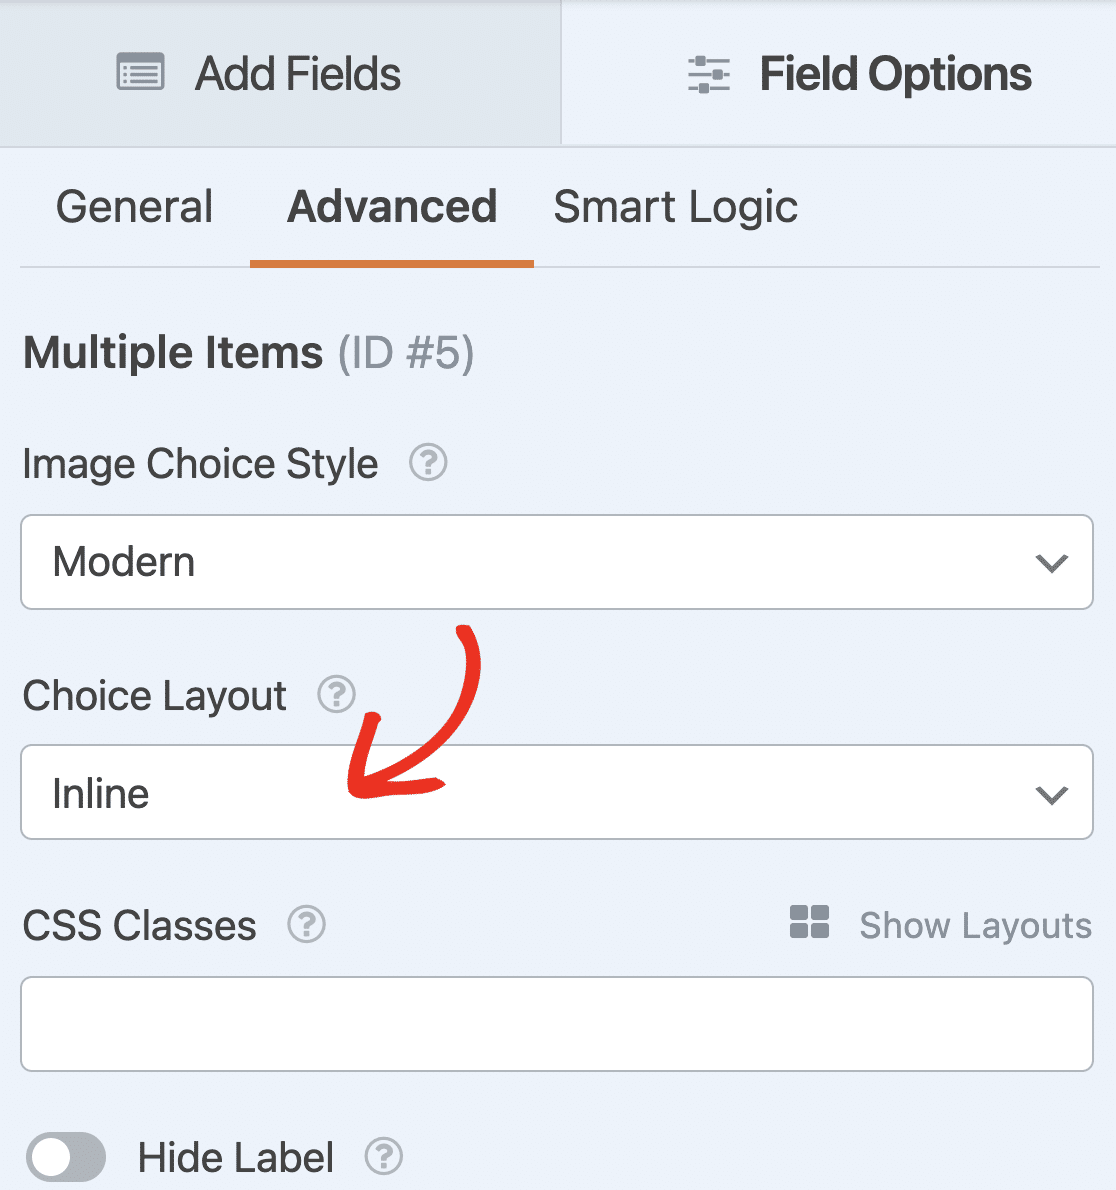 Selecting an image choice layout